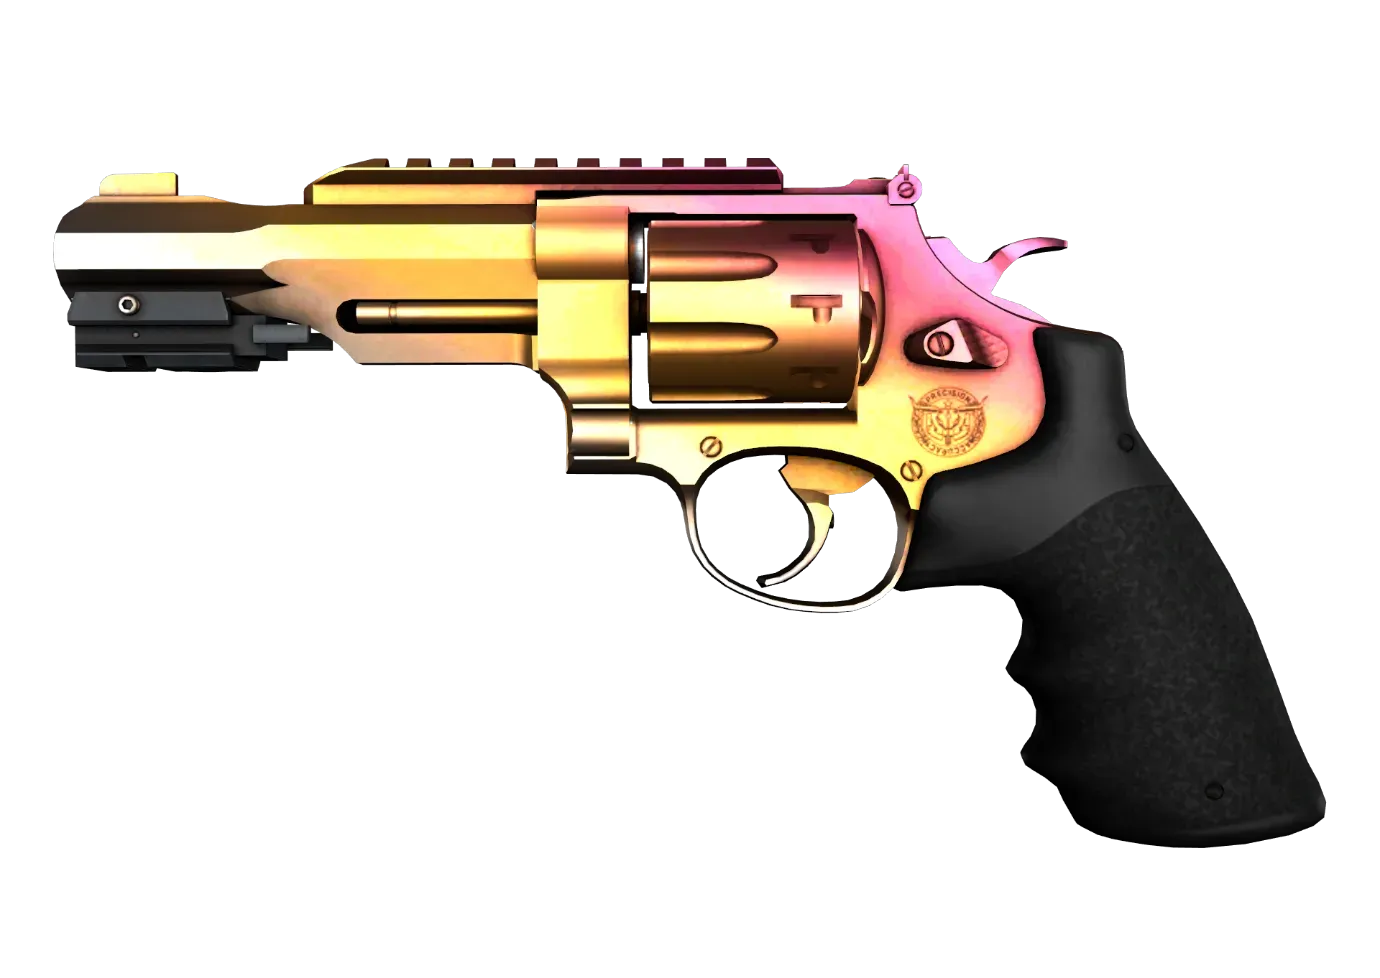 R8 Revolver